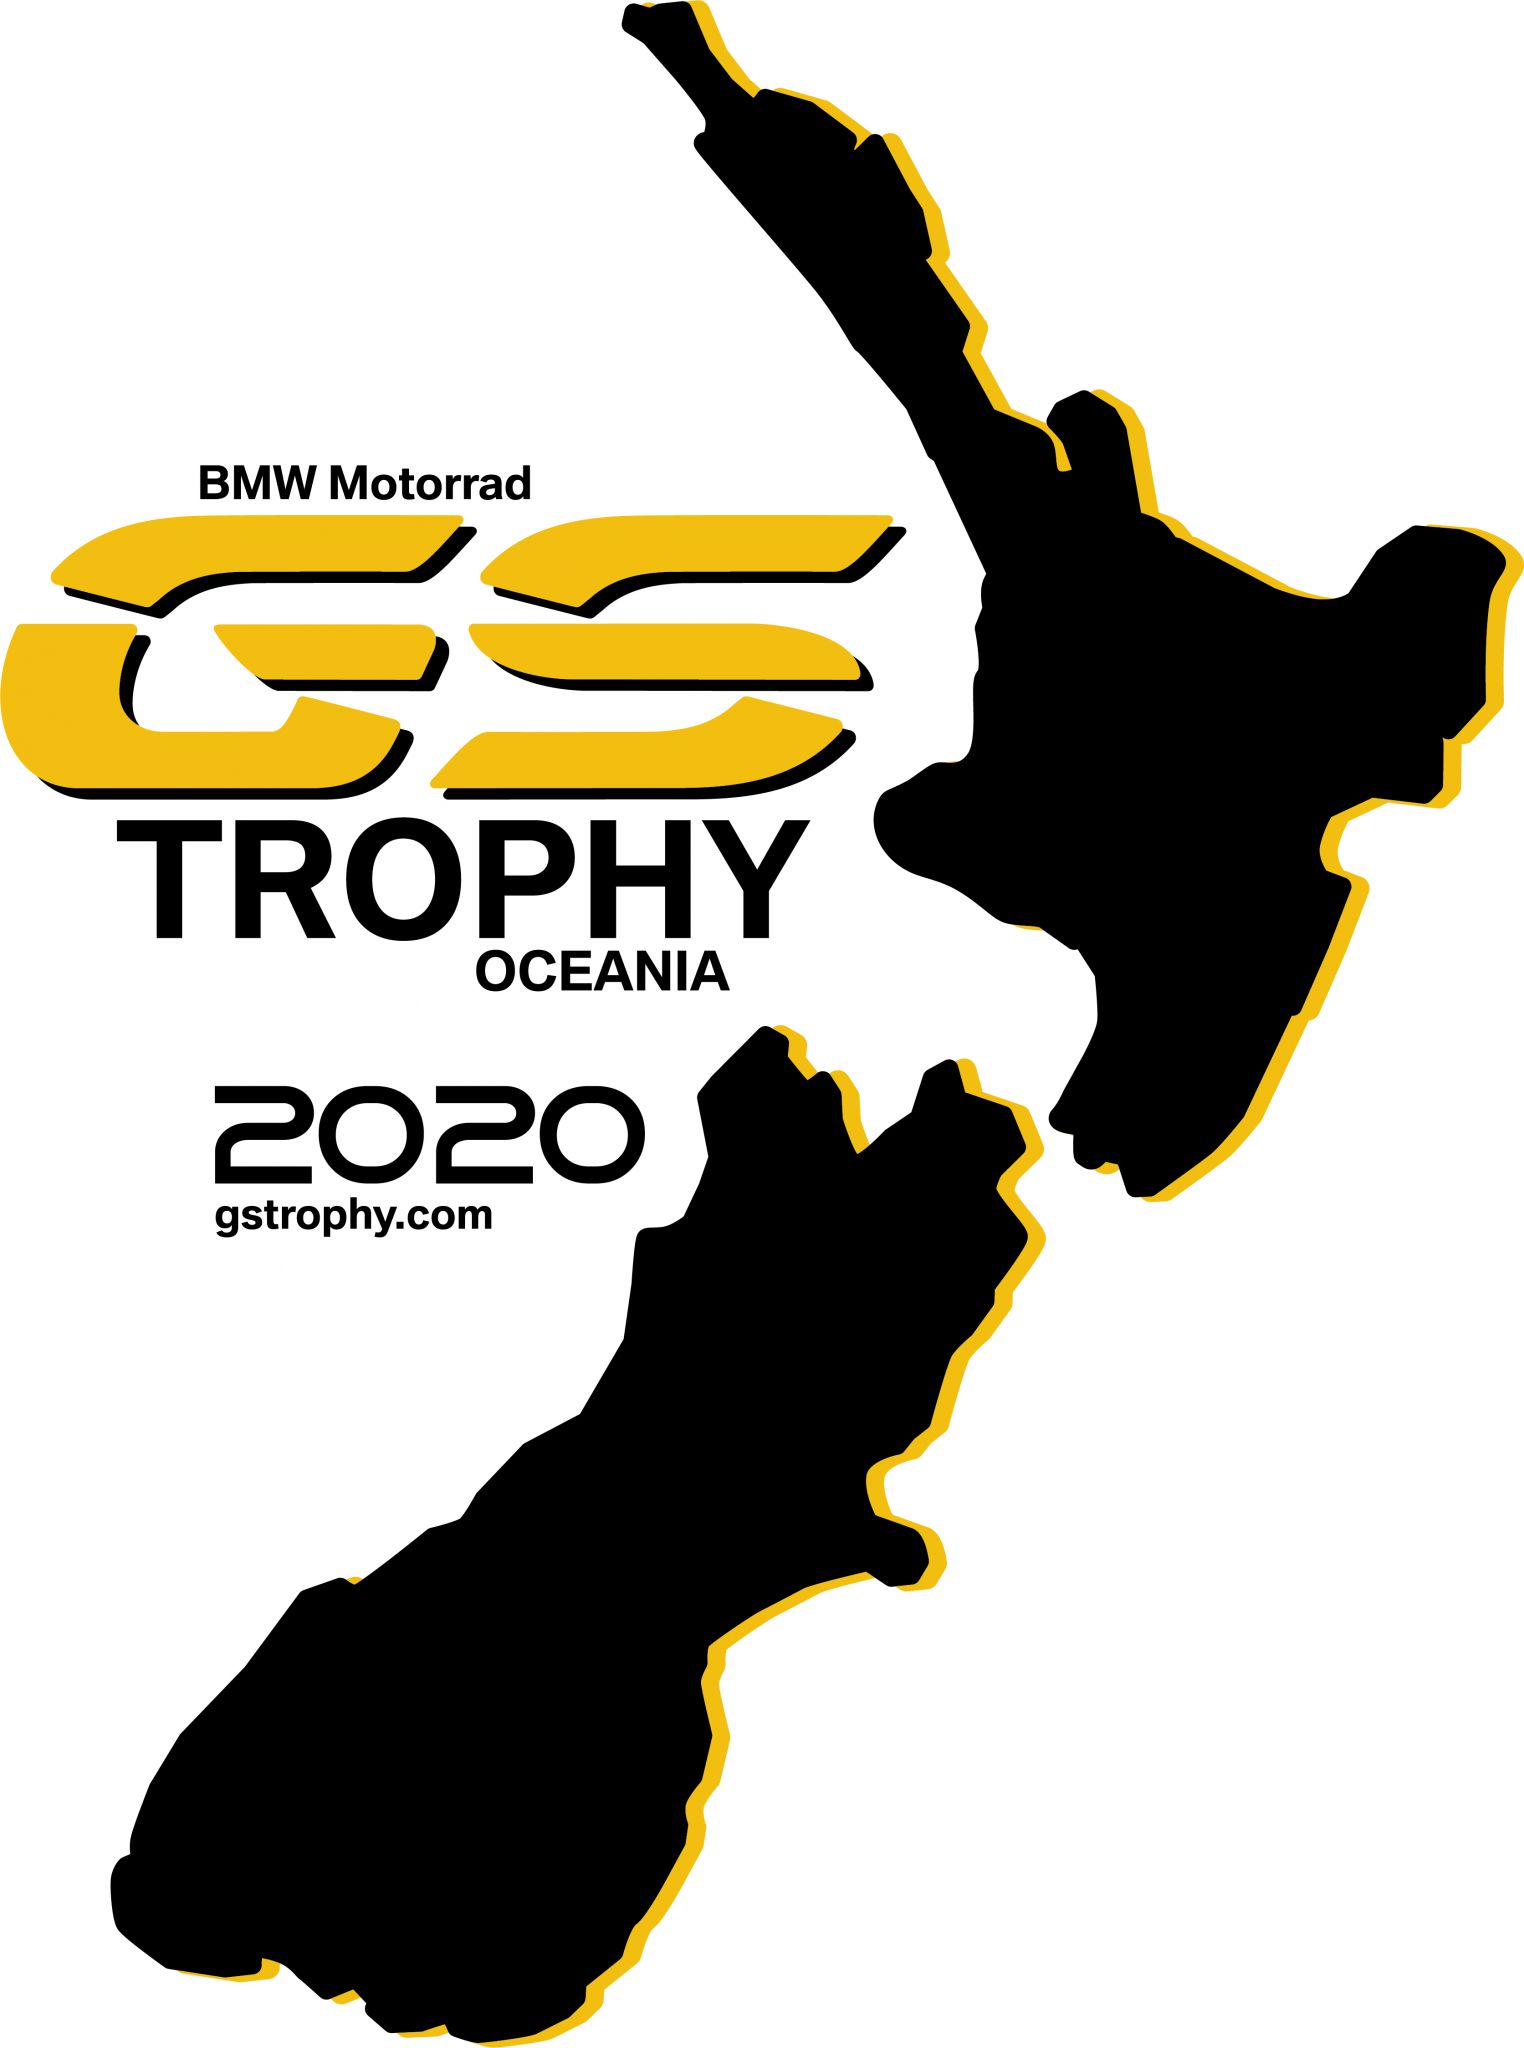 BMW Motorrad International GS Trophy Oceania 2020